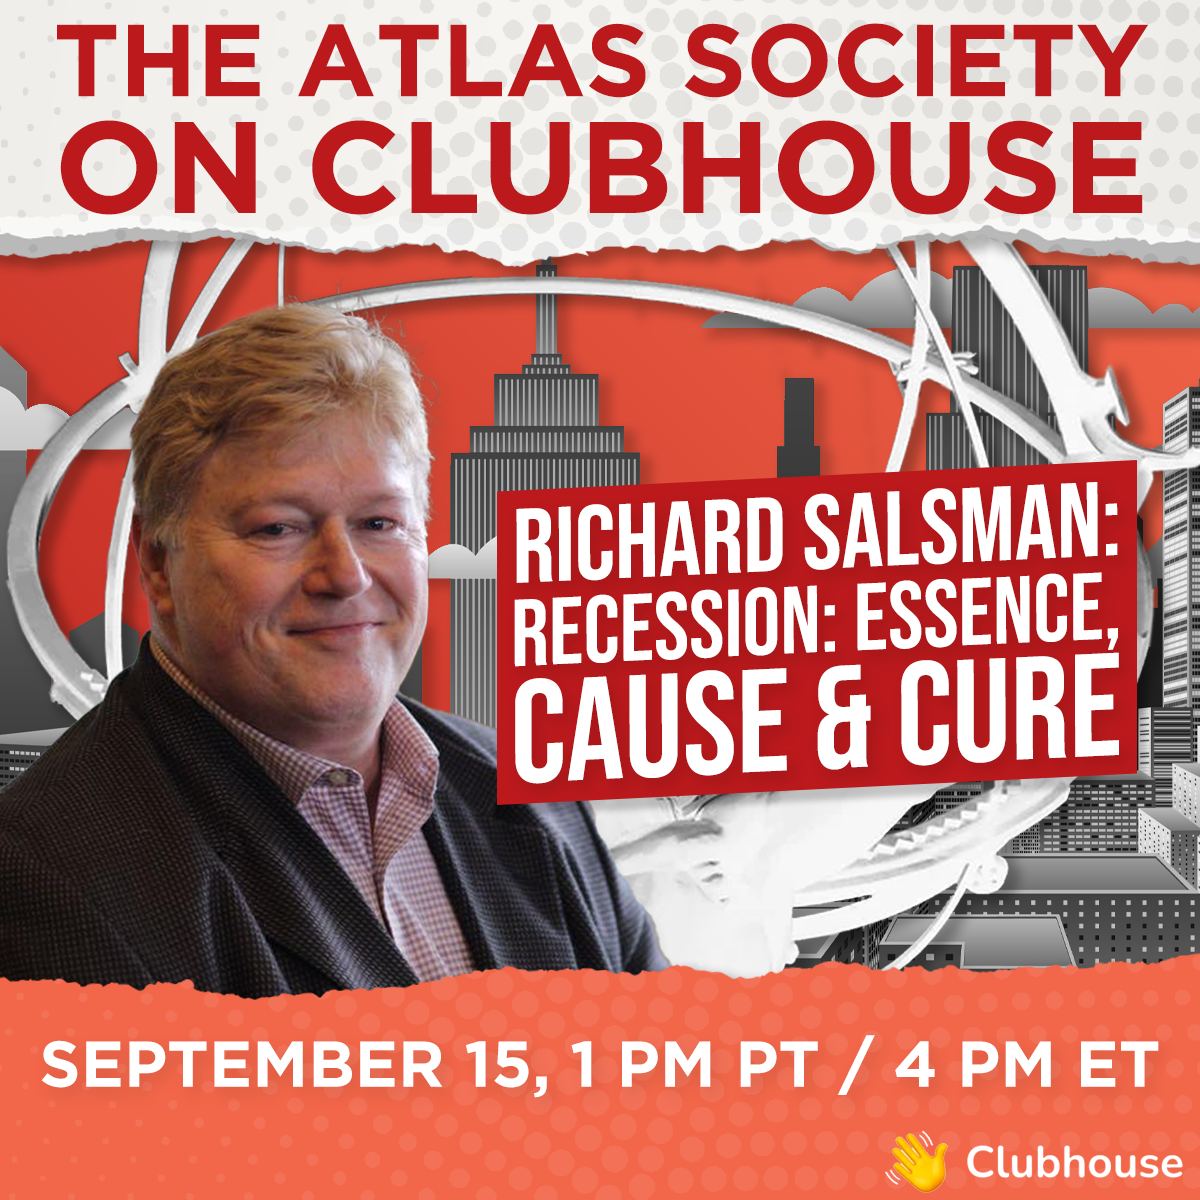 Richard Salsman - Recession: Essence, Cause & Cure